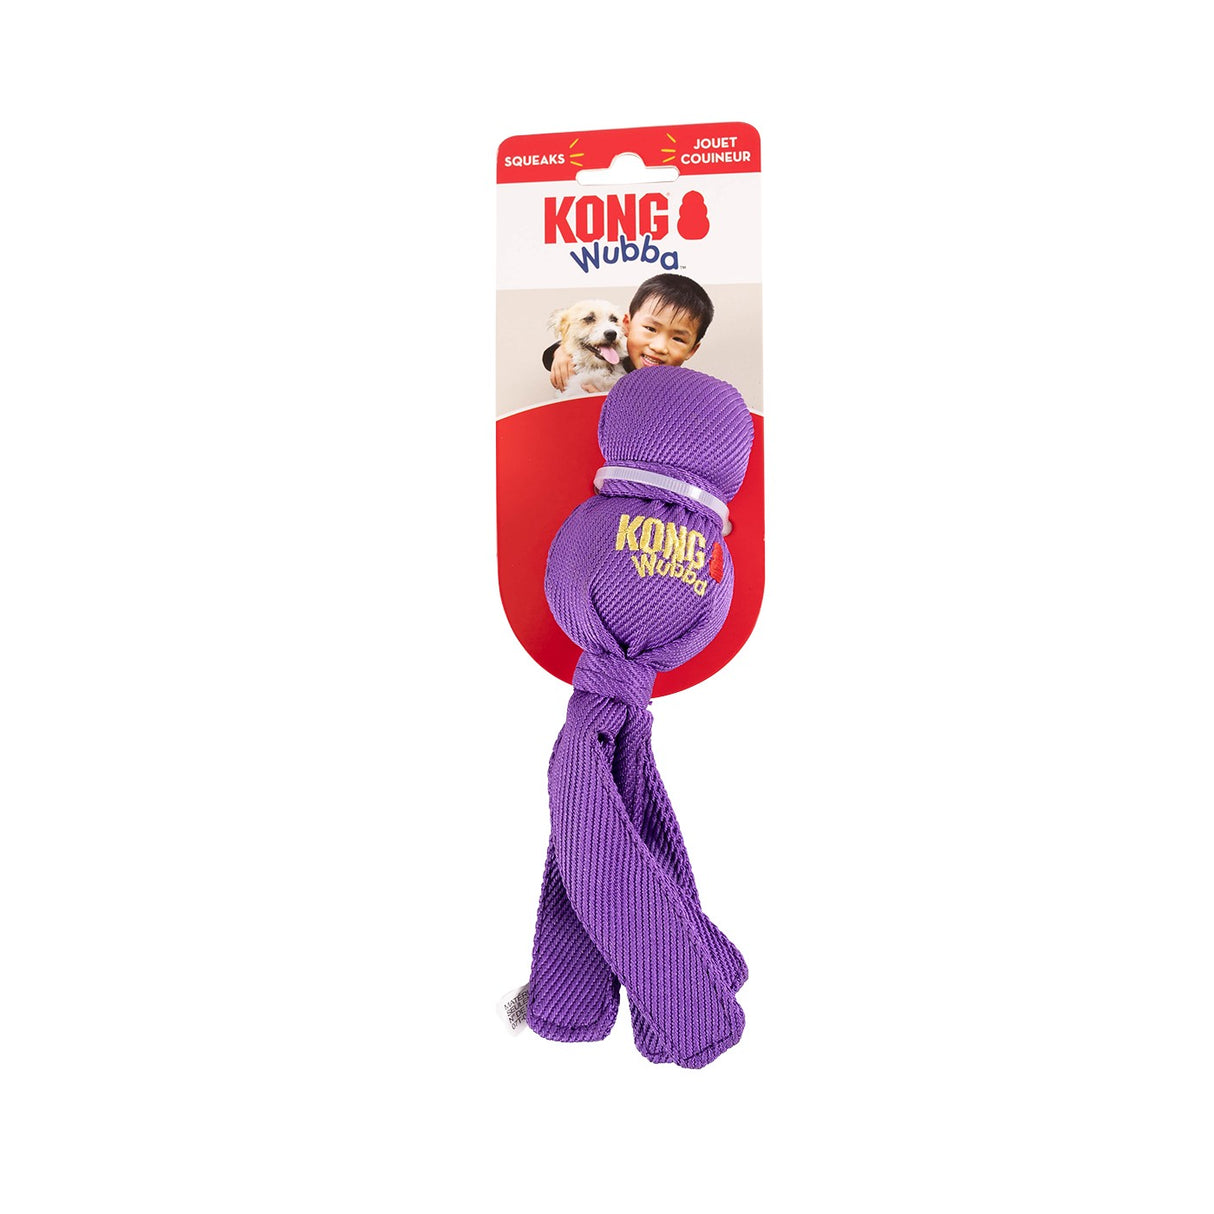 Kong Wubba - Small